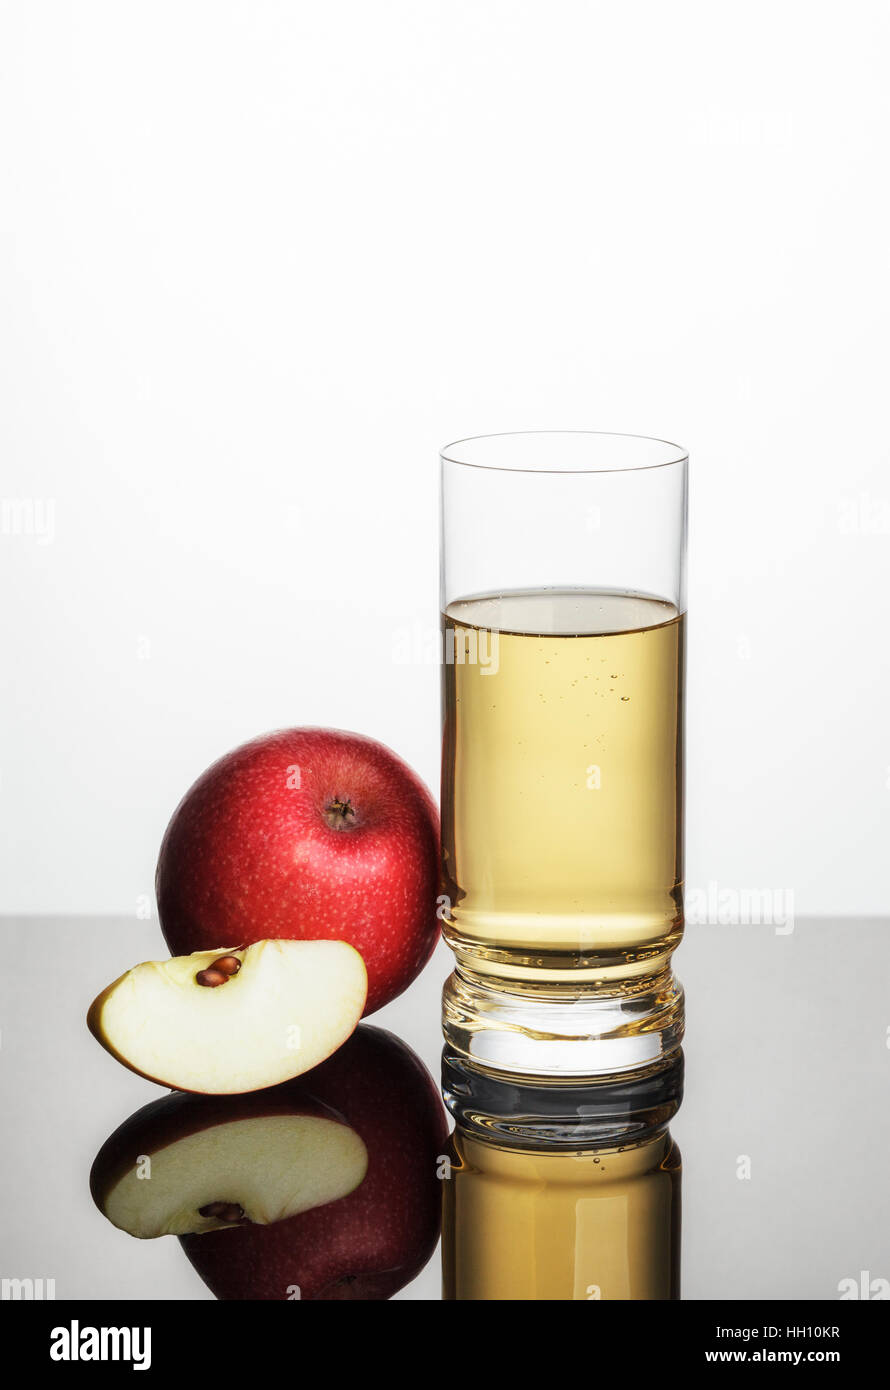 https://c8.alamy.com/comp/HH10KR/apple-juice-and-a-red-apple-HH10KR.jpg